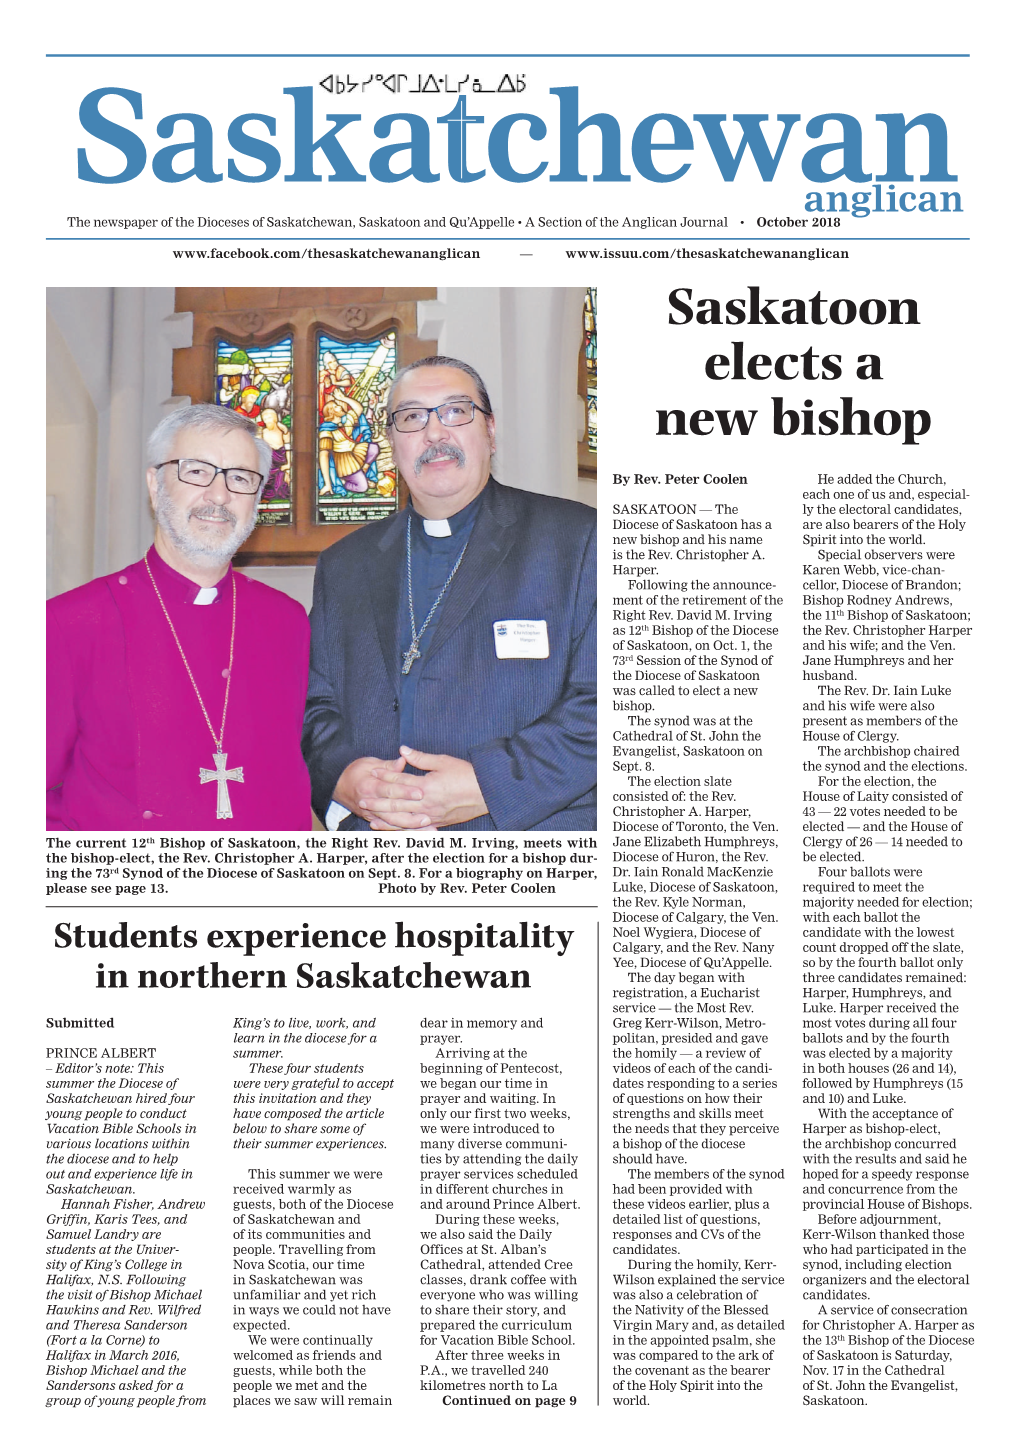 Saskatoon Elects a New Bishop